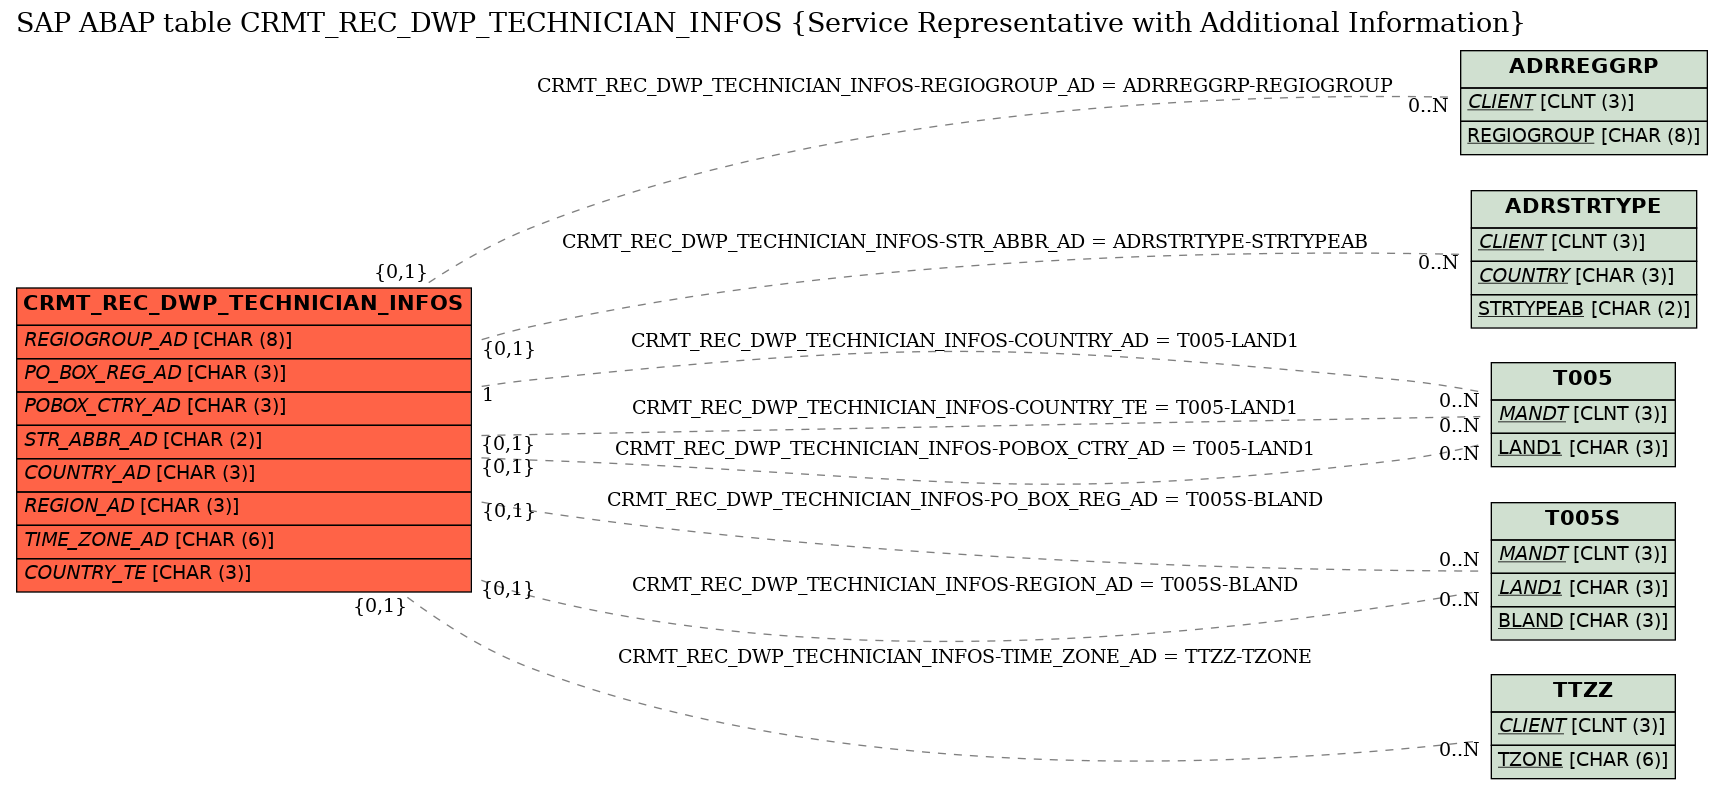 E-R Diagram for table CRMT_REC_DWP_TECHNICIAN_INFOS (Service Representative with Additional Information)